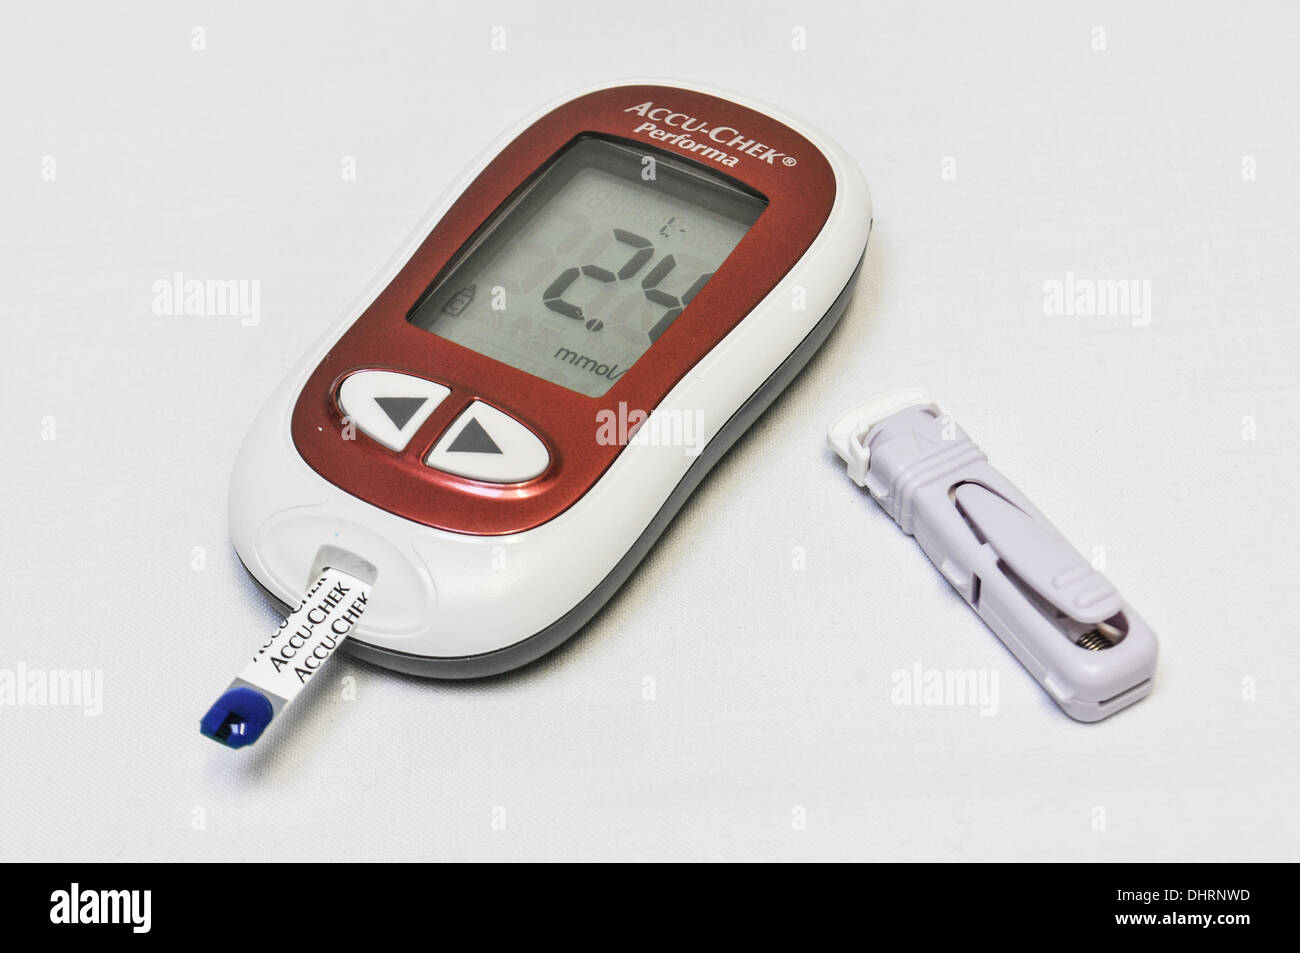 Accu-Chek Performa Blood Glucose Monitor Stock Photo - Alamy